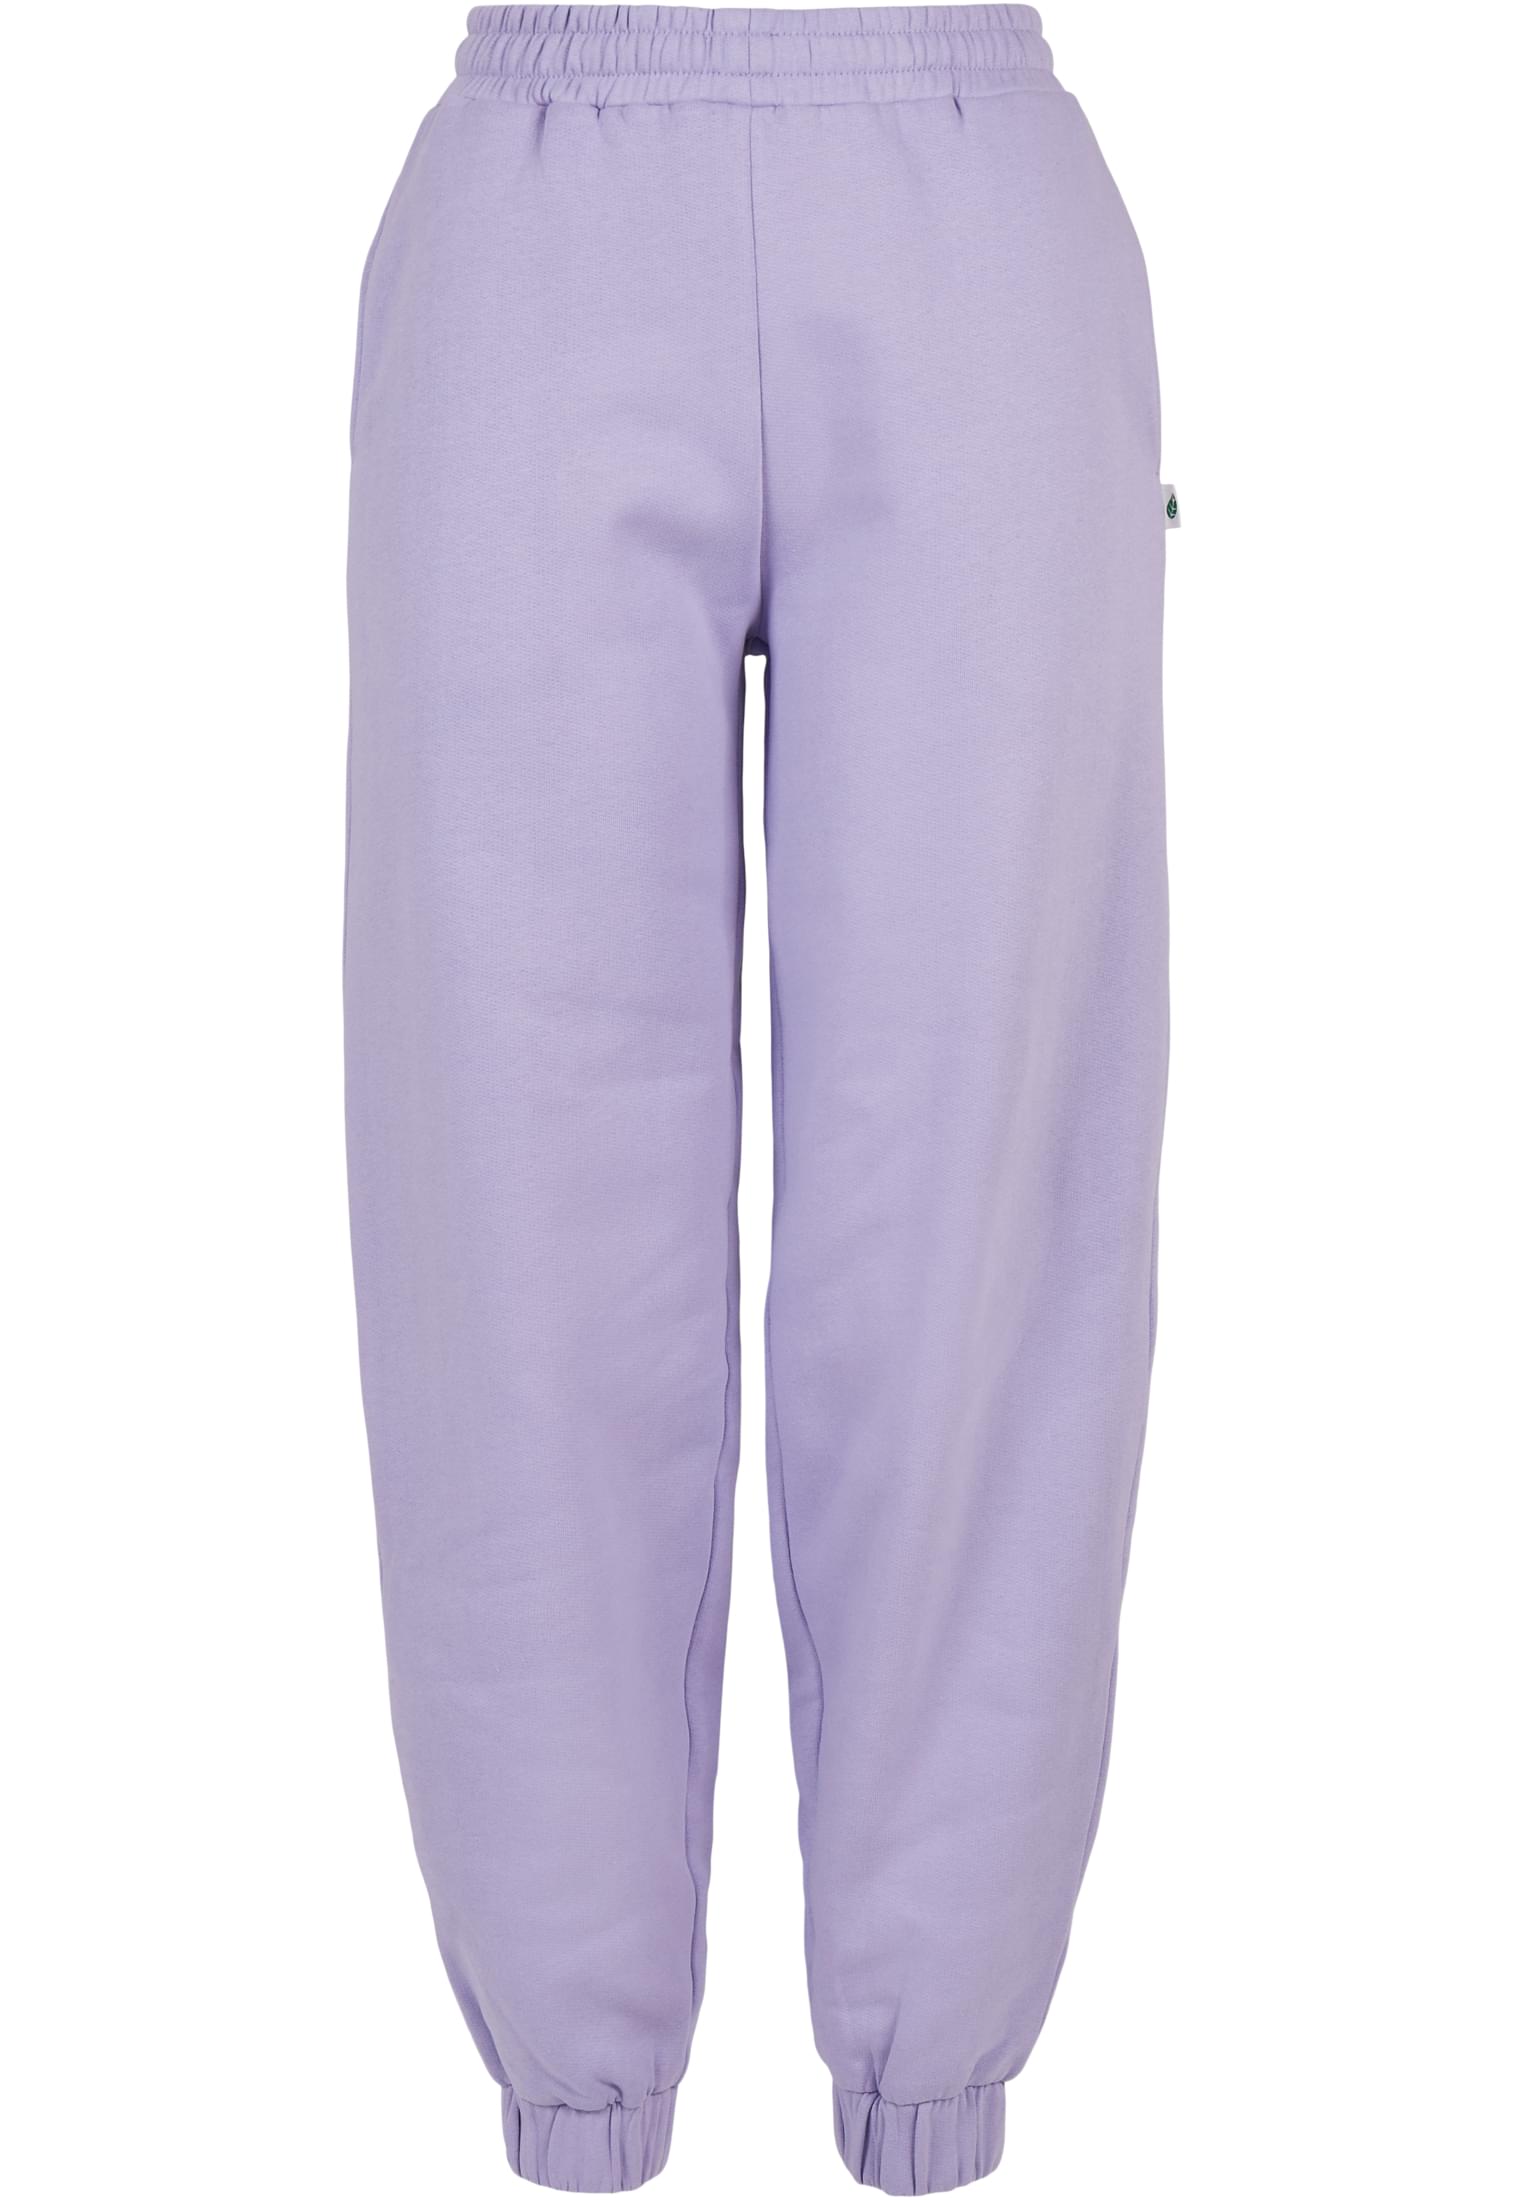 Women's Organic Balloon Sweatpants with High Waist Lavender